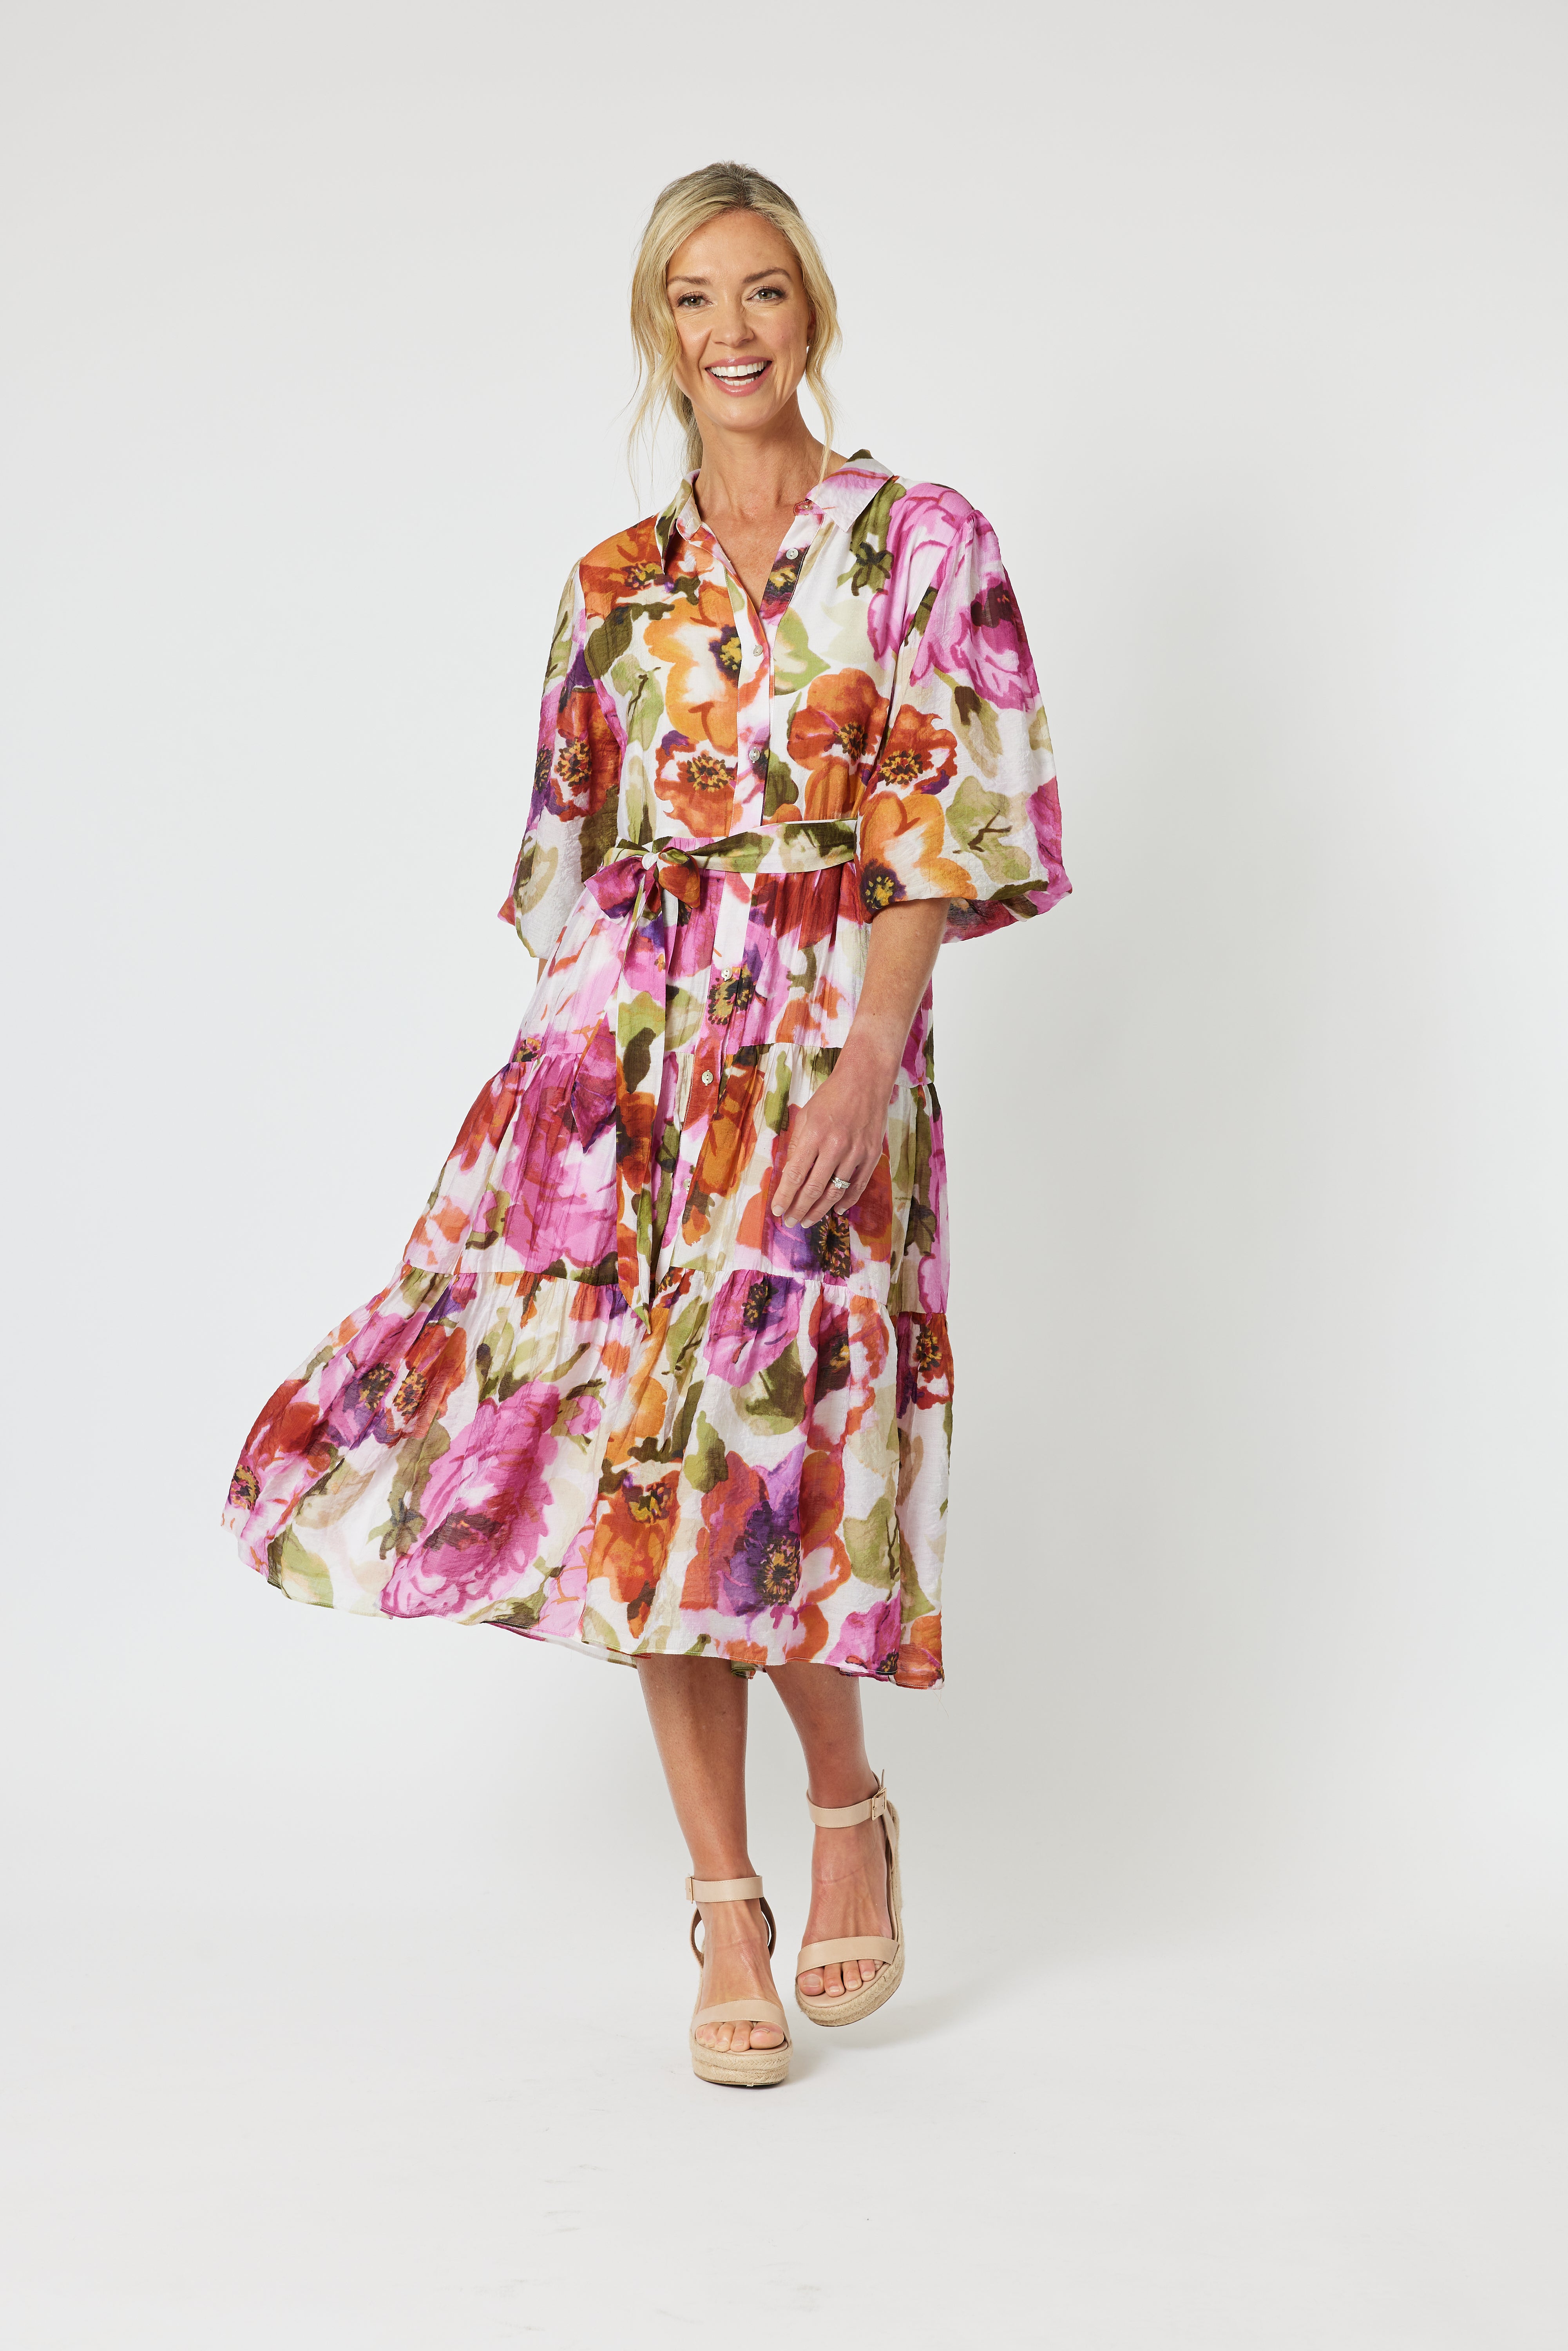 Gordon Smith Maui Floral Print Dress - Berry